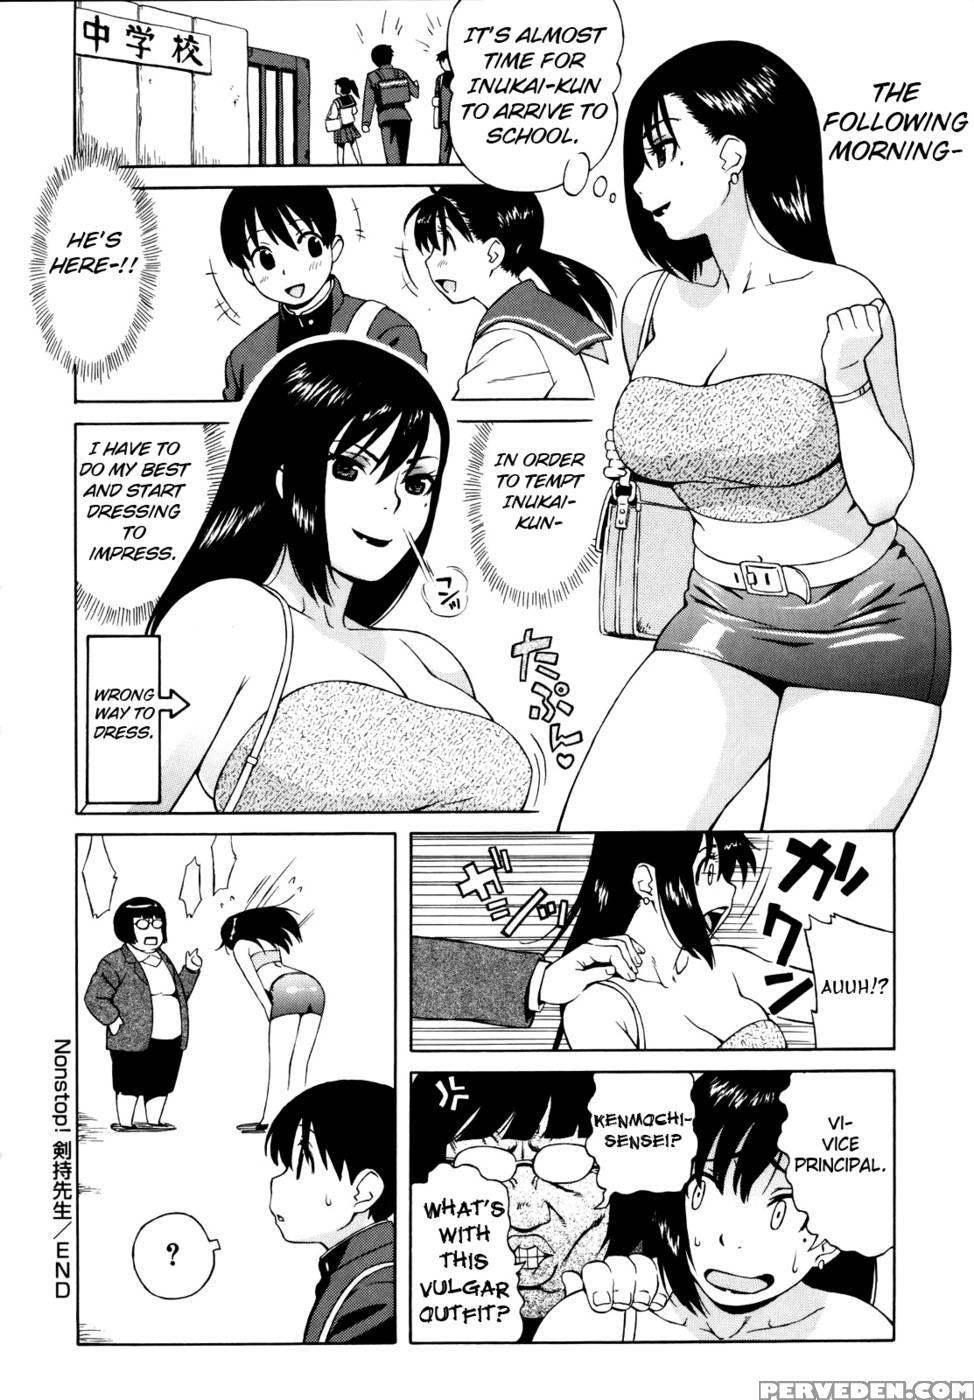 Nonstop! Kenmochi-sensei Version 2 - Jingrock 1 Manga Page 20 - Read Manga  Nonstop! Kenmochi-sensei Version 2 - Jingrock 1 Online For Free